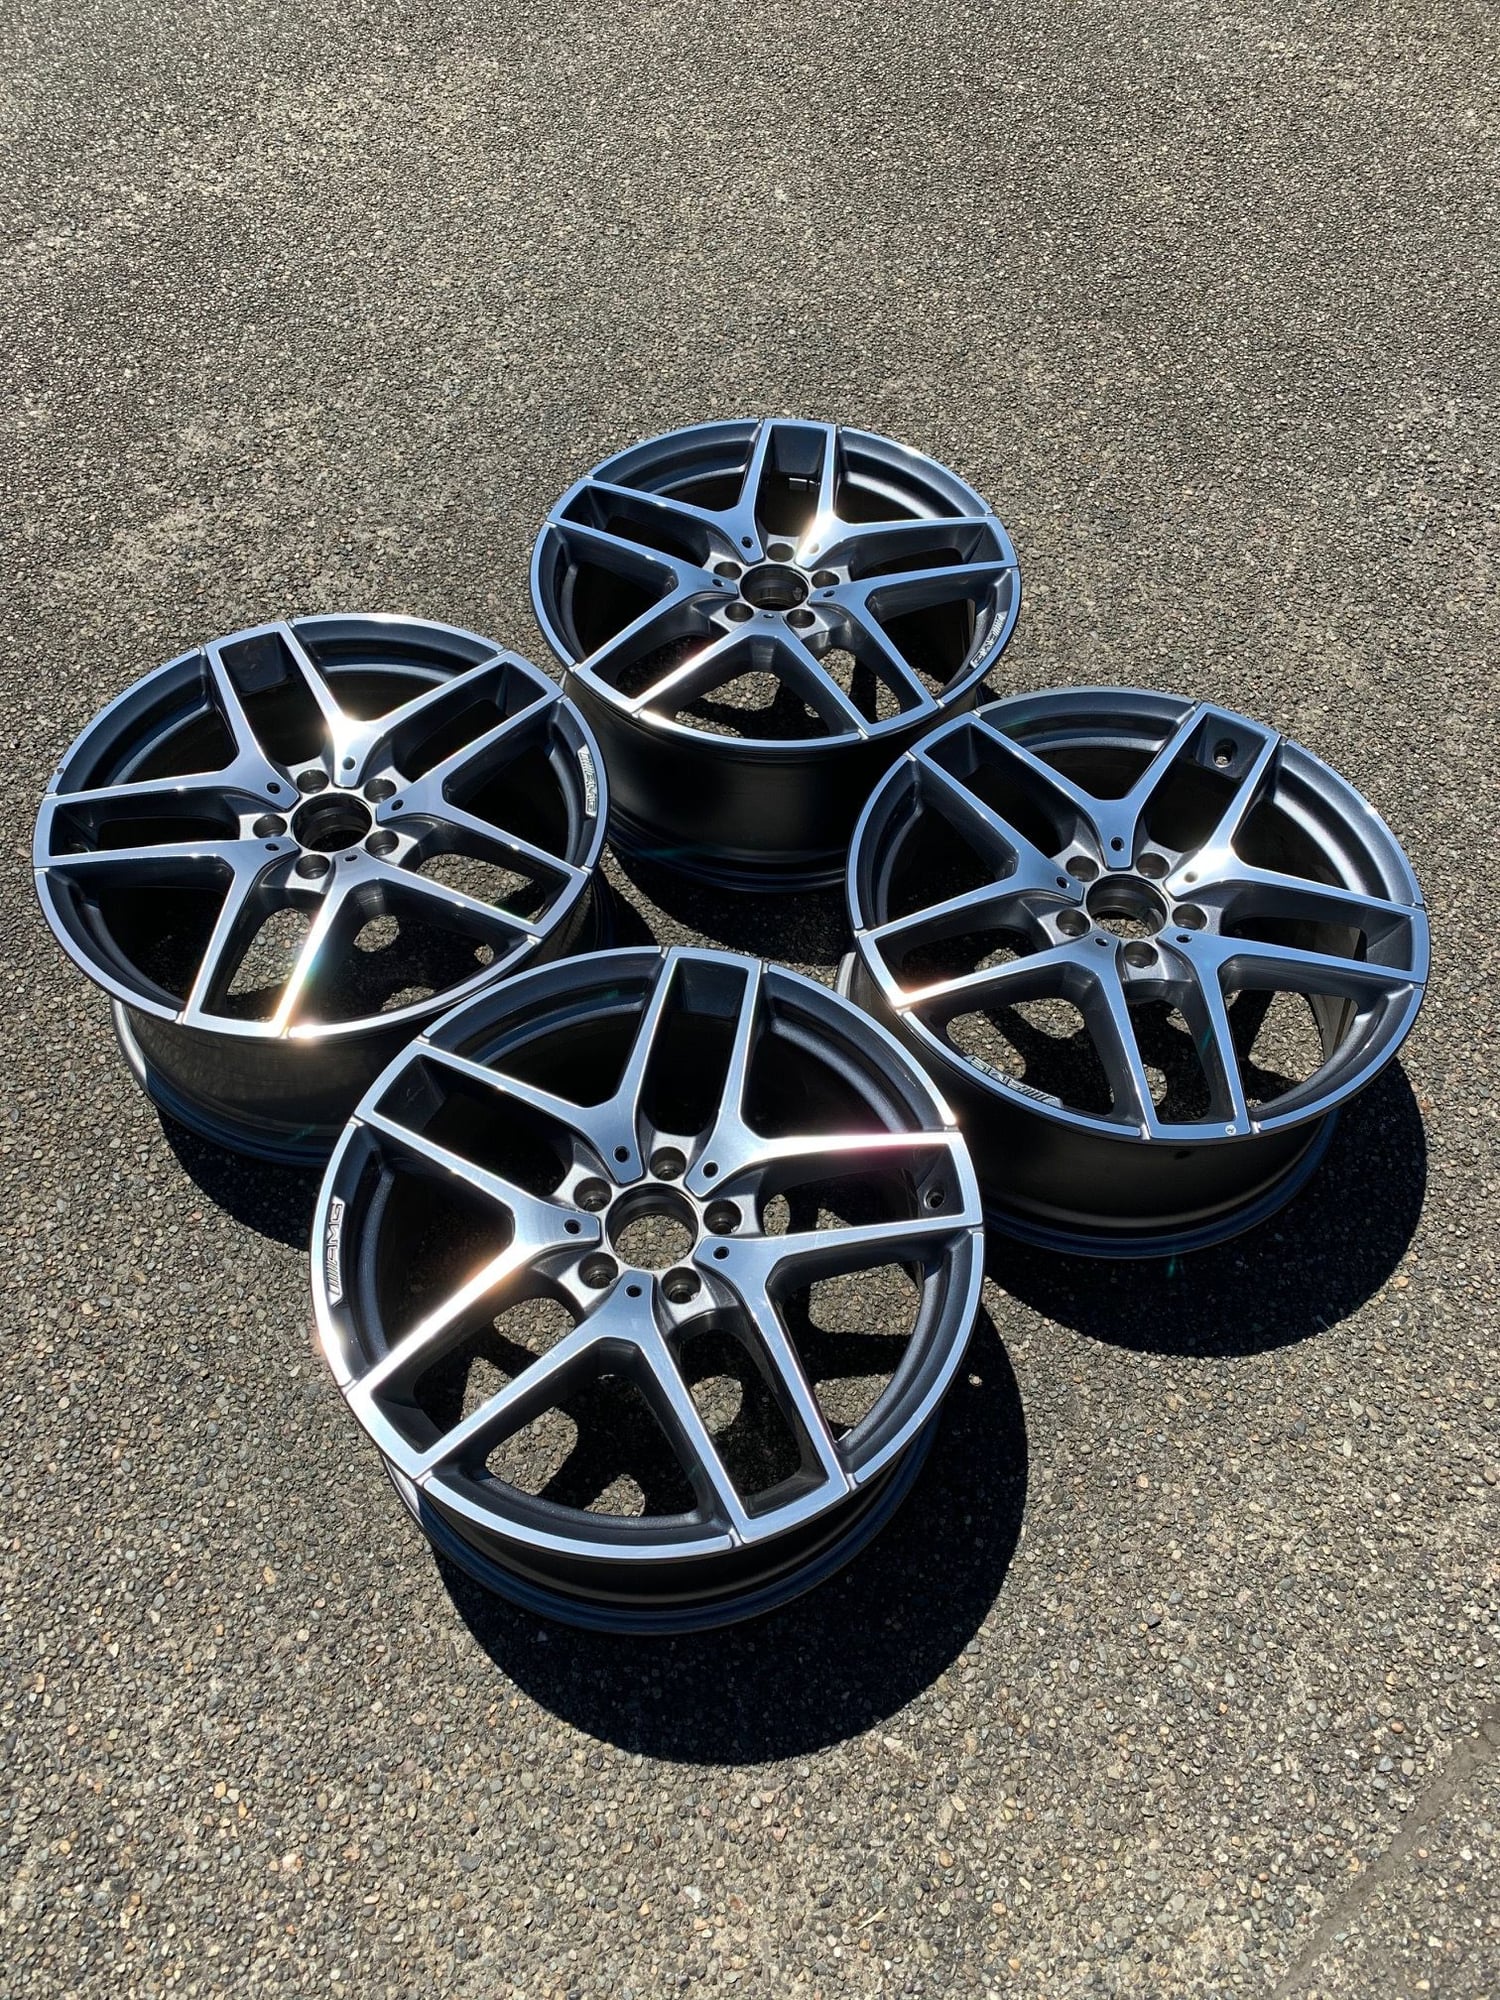 Wheels and Tires/Axles - Mercedes GLC AMG 19" Wheel Rim Set Genuine OEM - Used - 2016 to 2019 Mercedes-Benz GLC300 - Seattle, WA 98003, United States